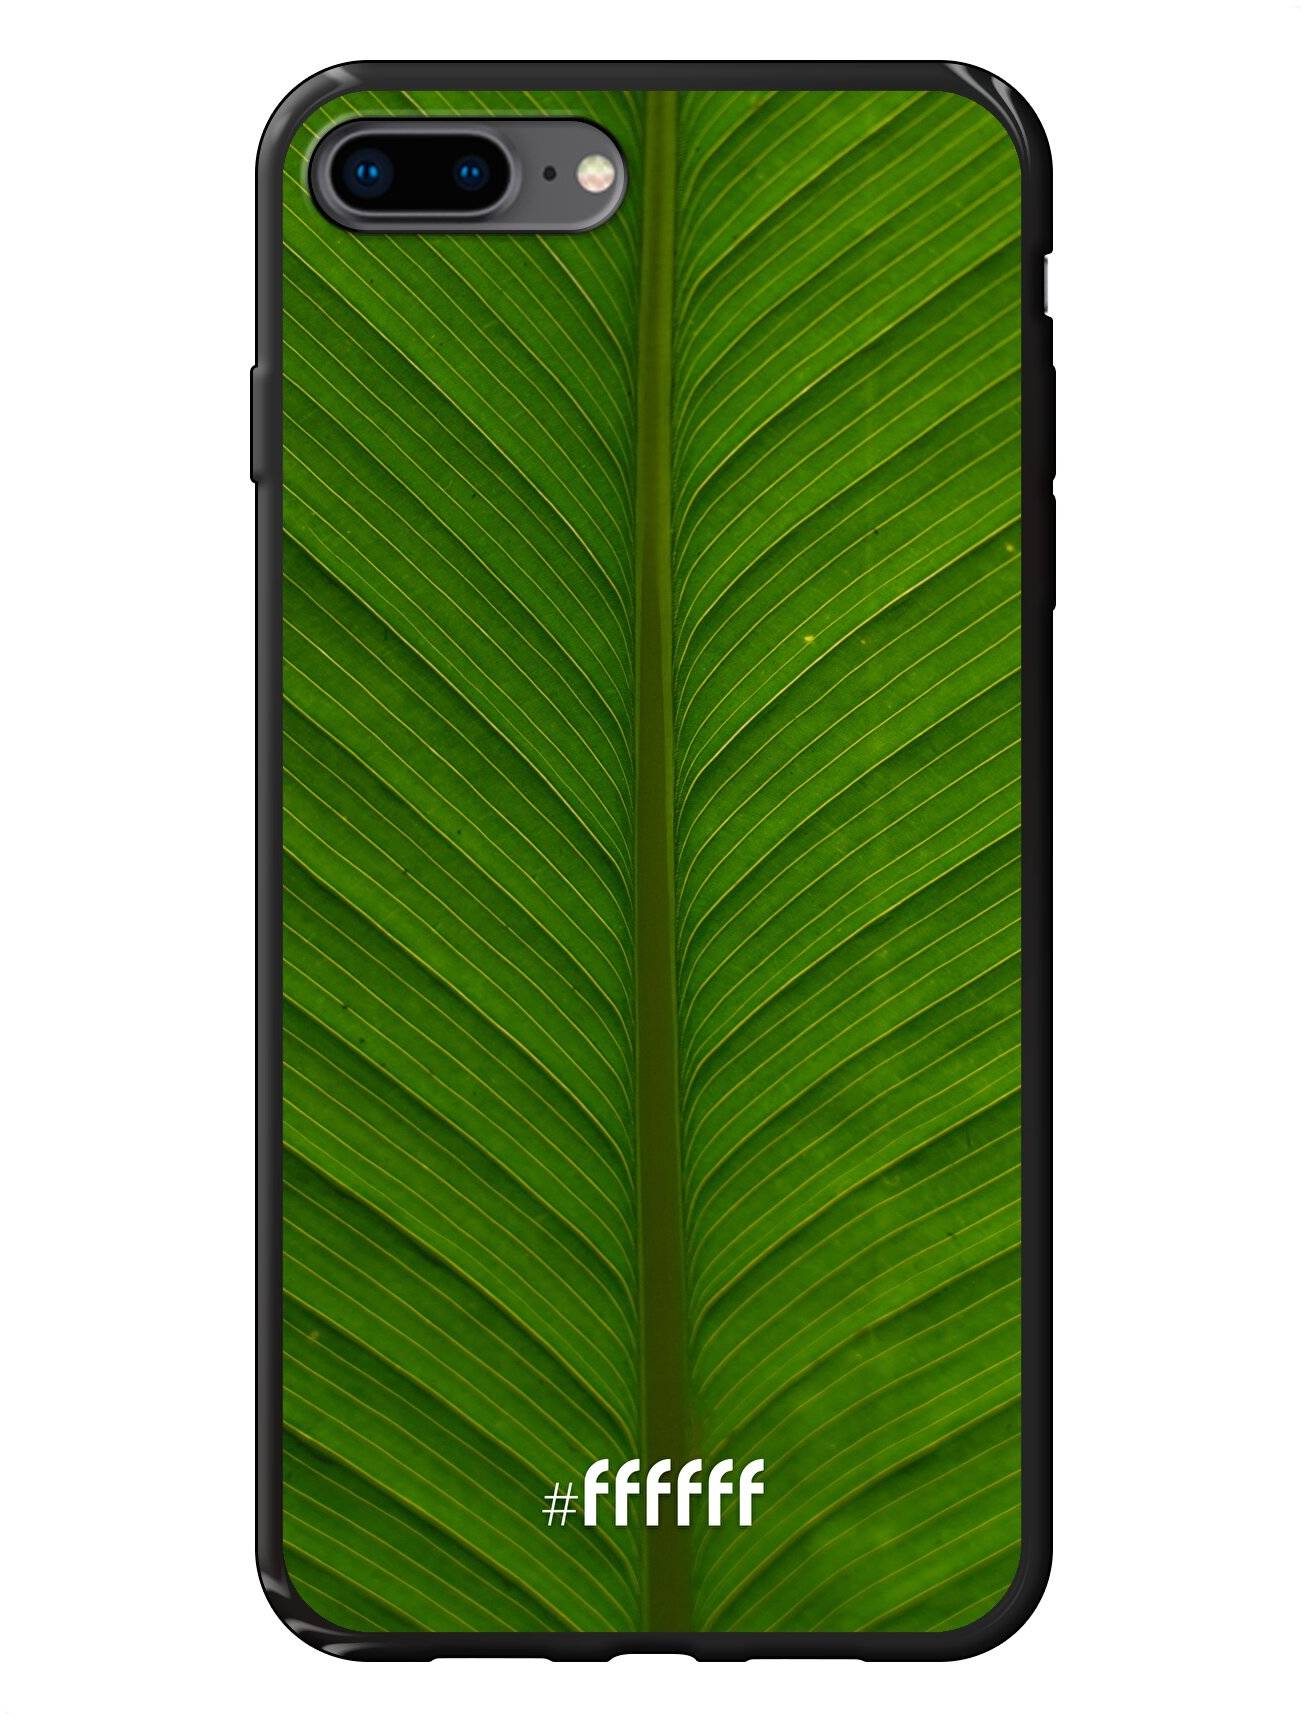 Unseen Green iPhone 7 Plus